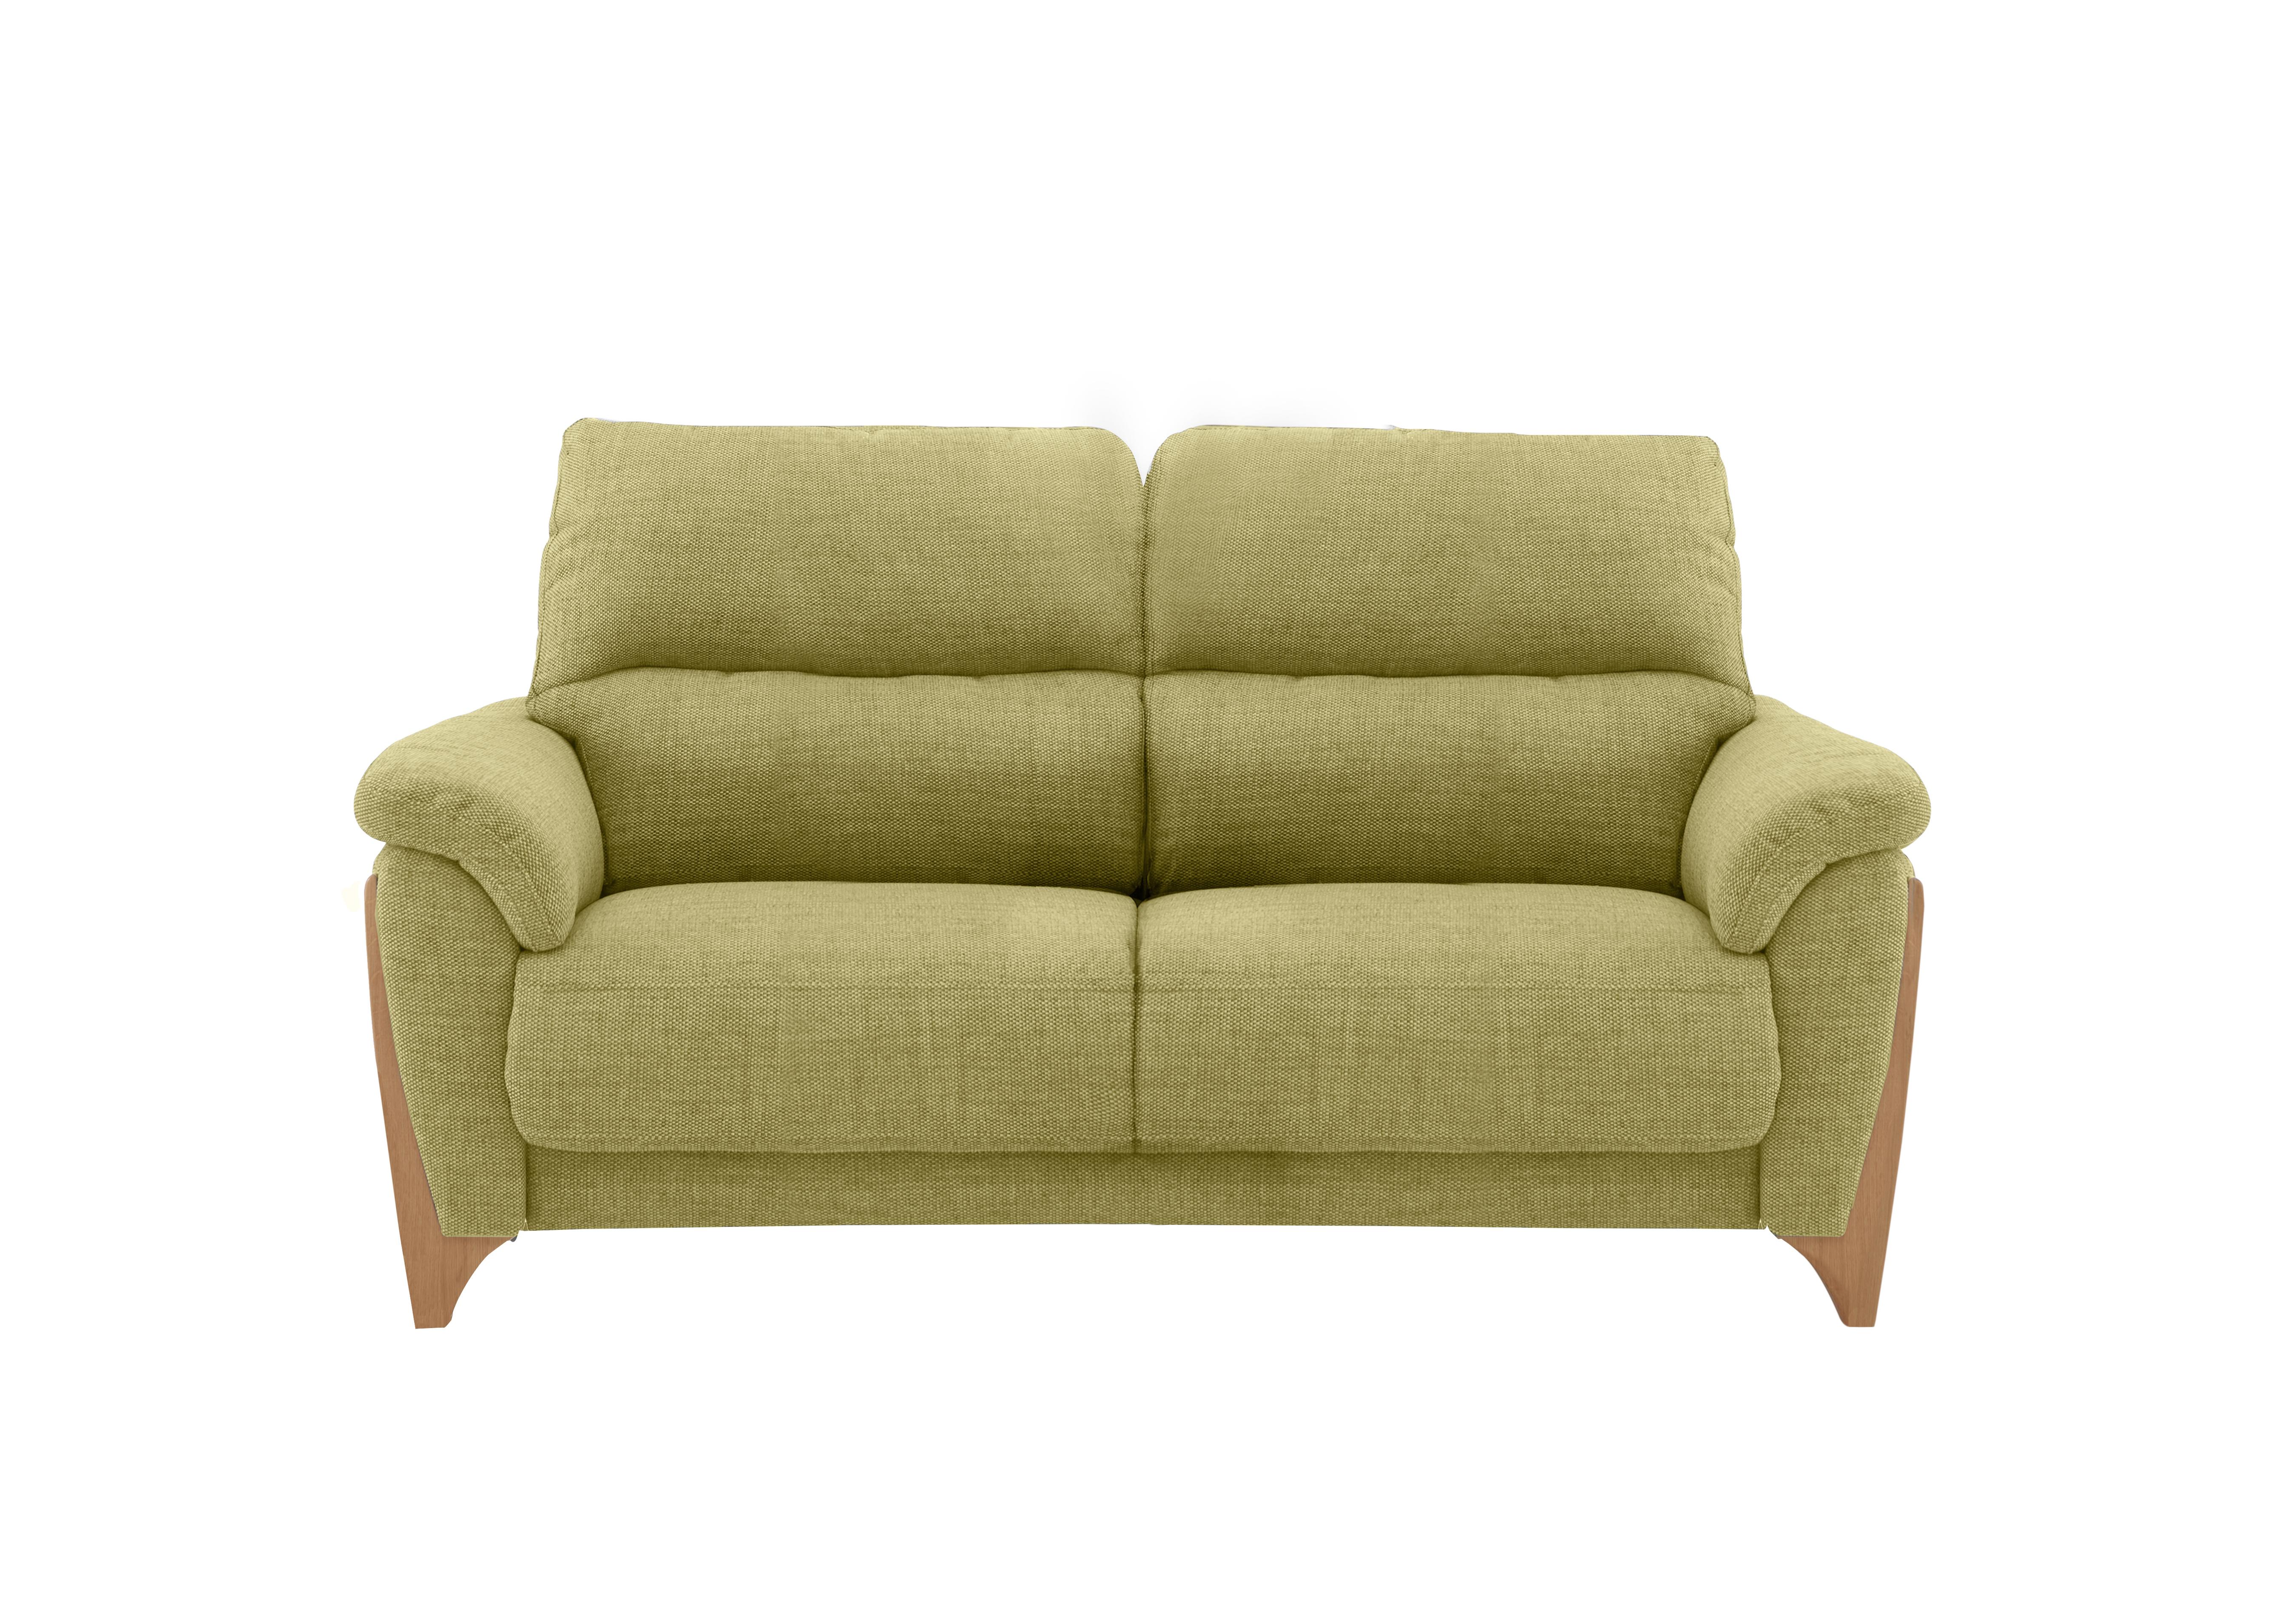 Enna Medium Fabric Sofa in P220 on Furniture Village